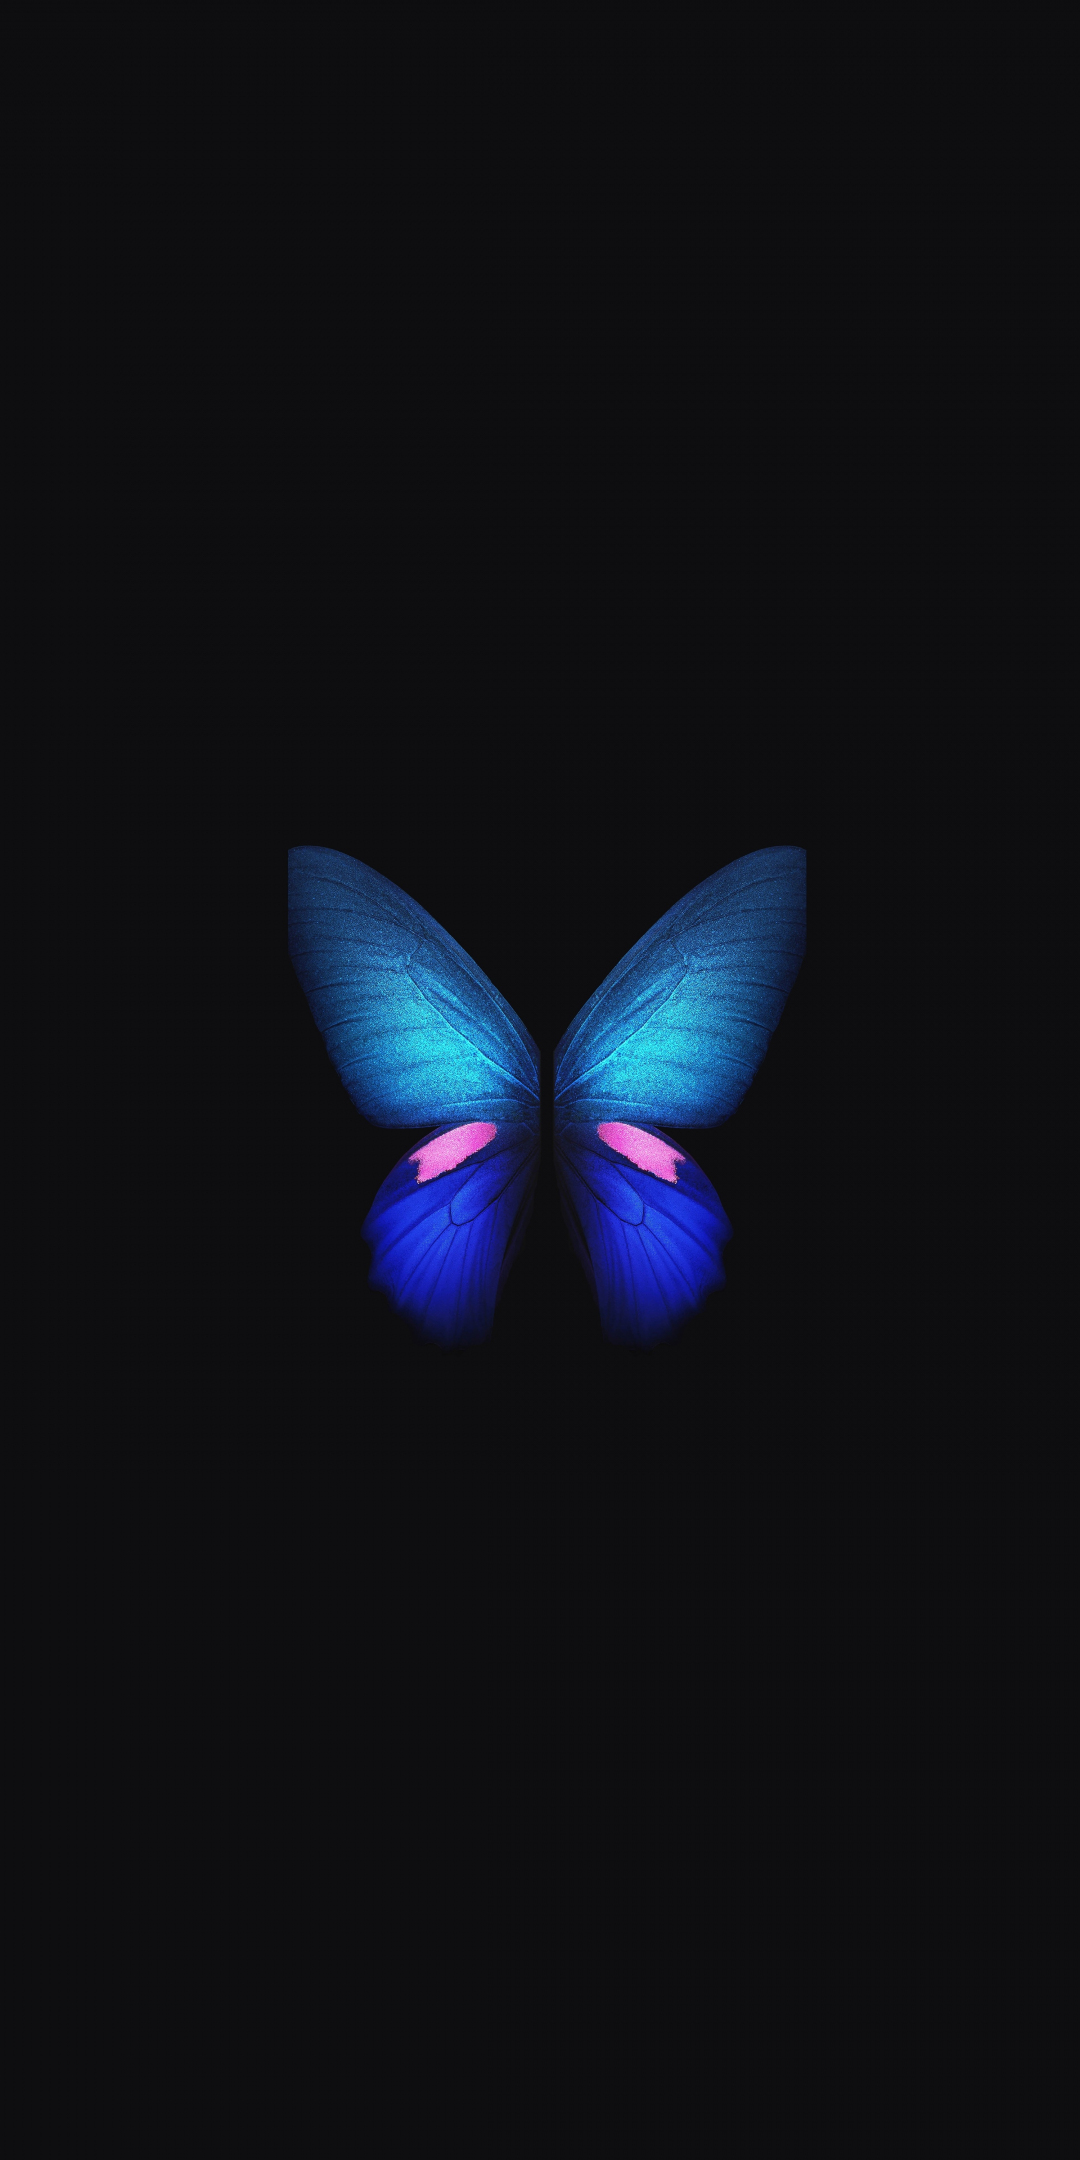 Download wallpaper 1080x2160 samsung galaxy fold, blue butterfly ...